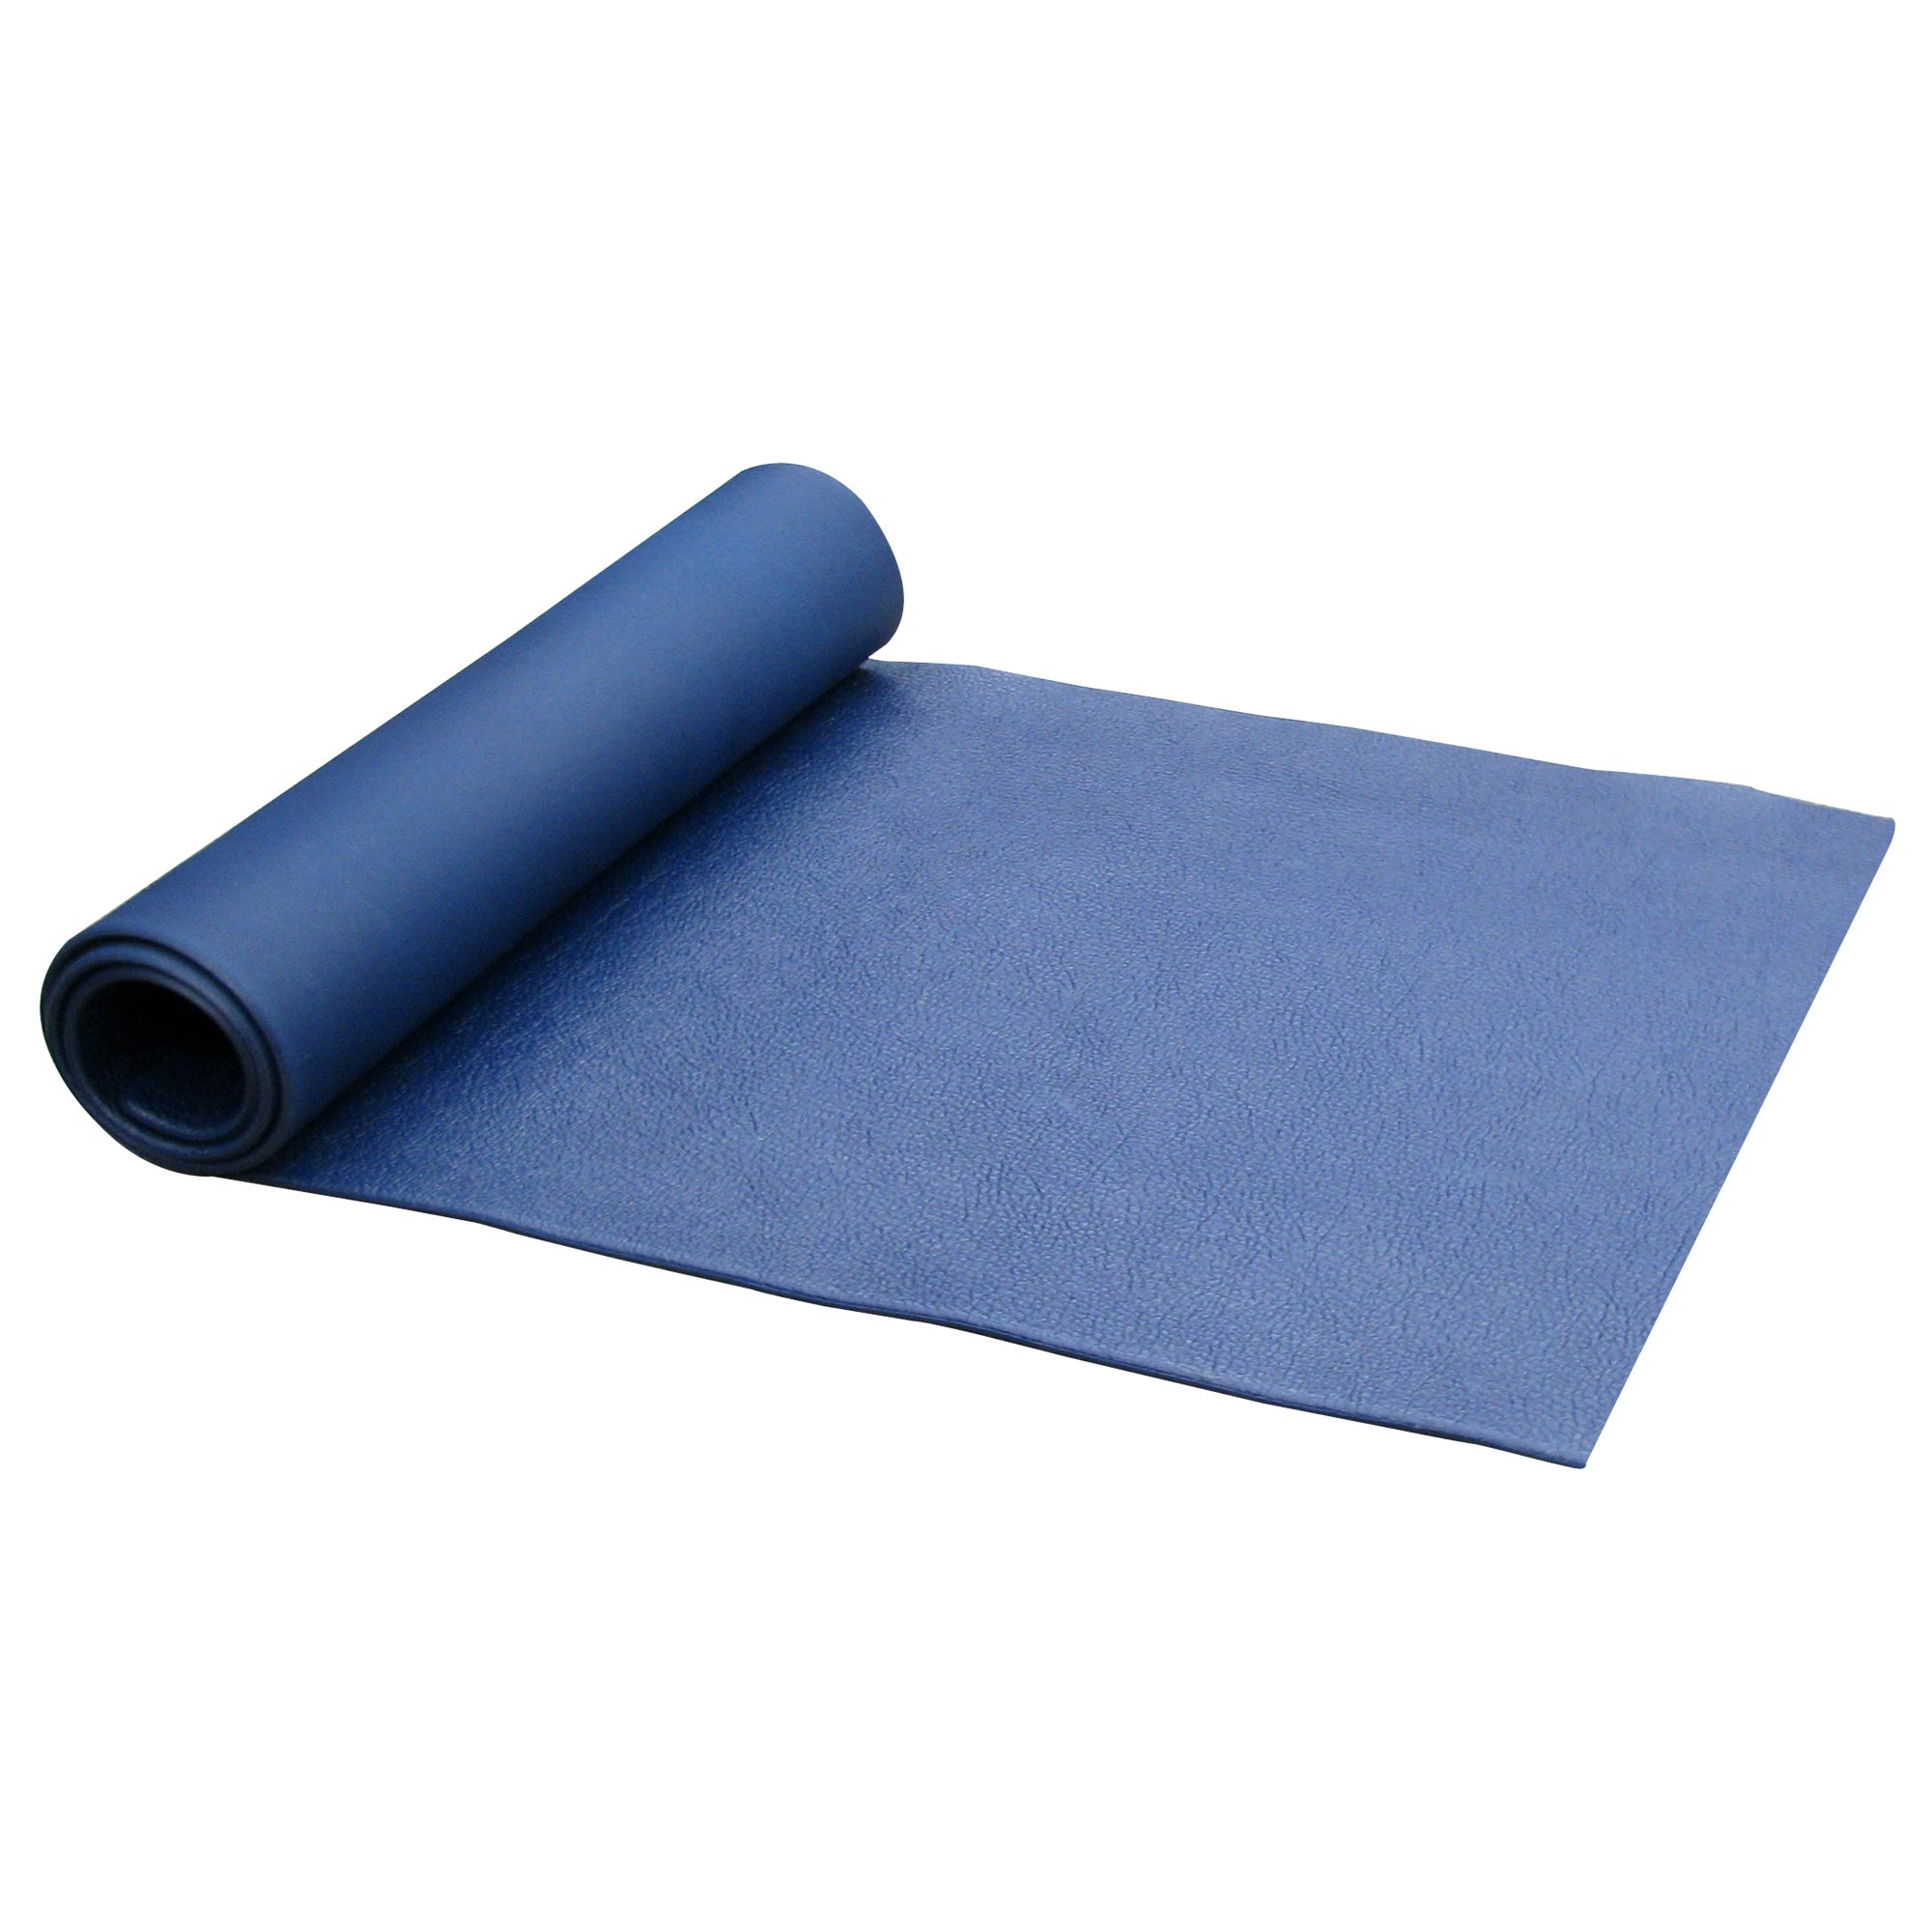 buy pilates mat online